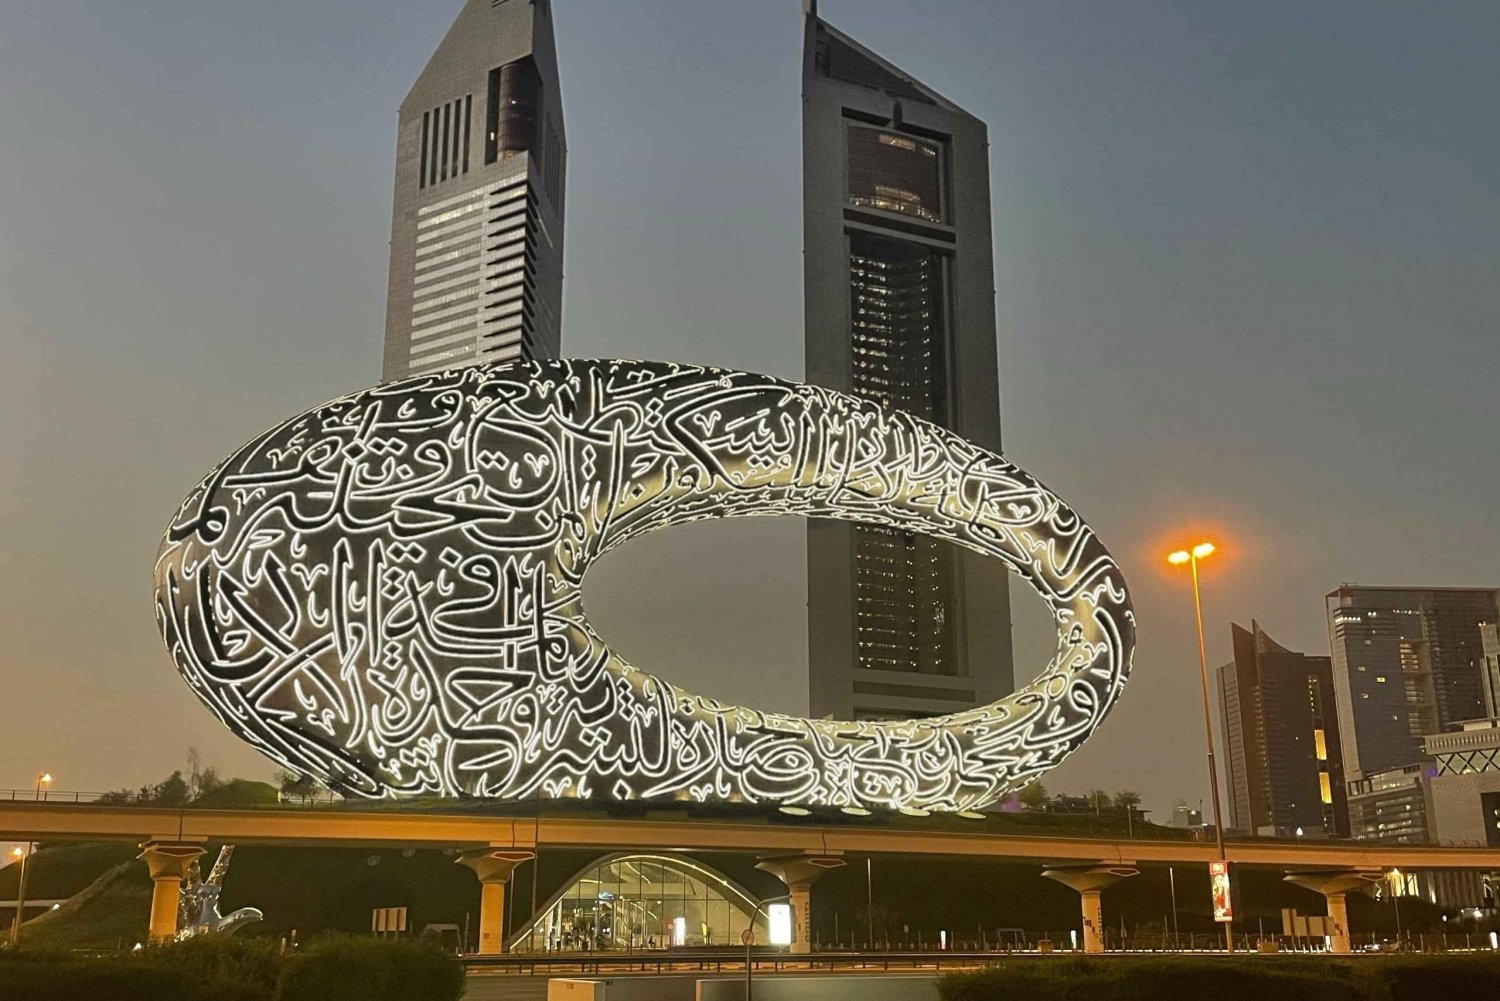 Dubai:Privater Rahmeneintritt, Moschee, Souks, Verkostungen& Transfer